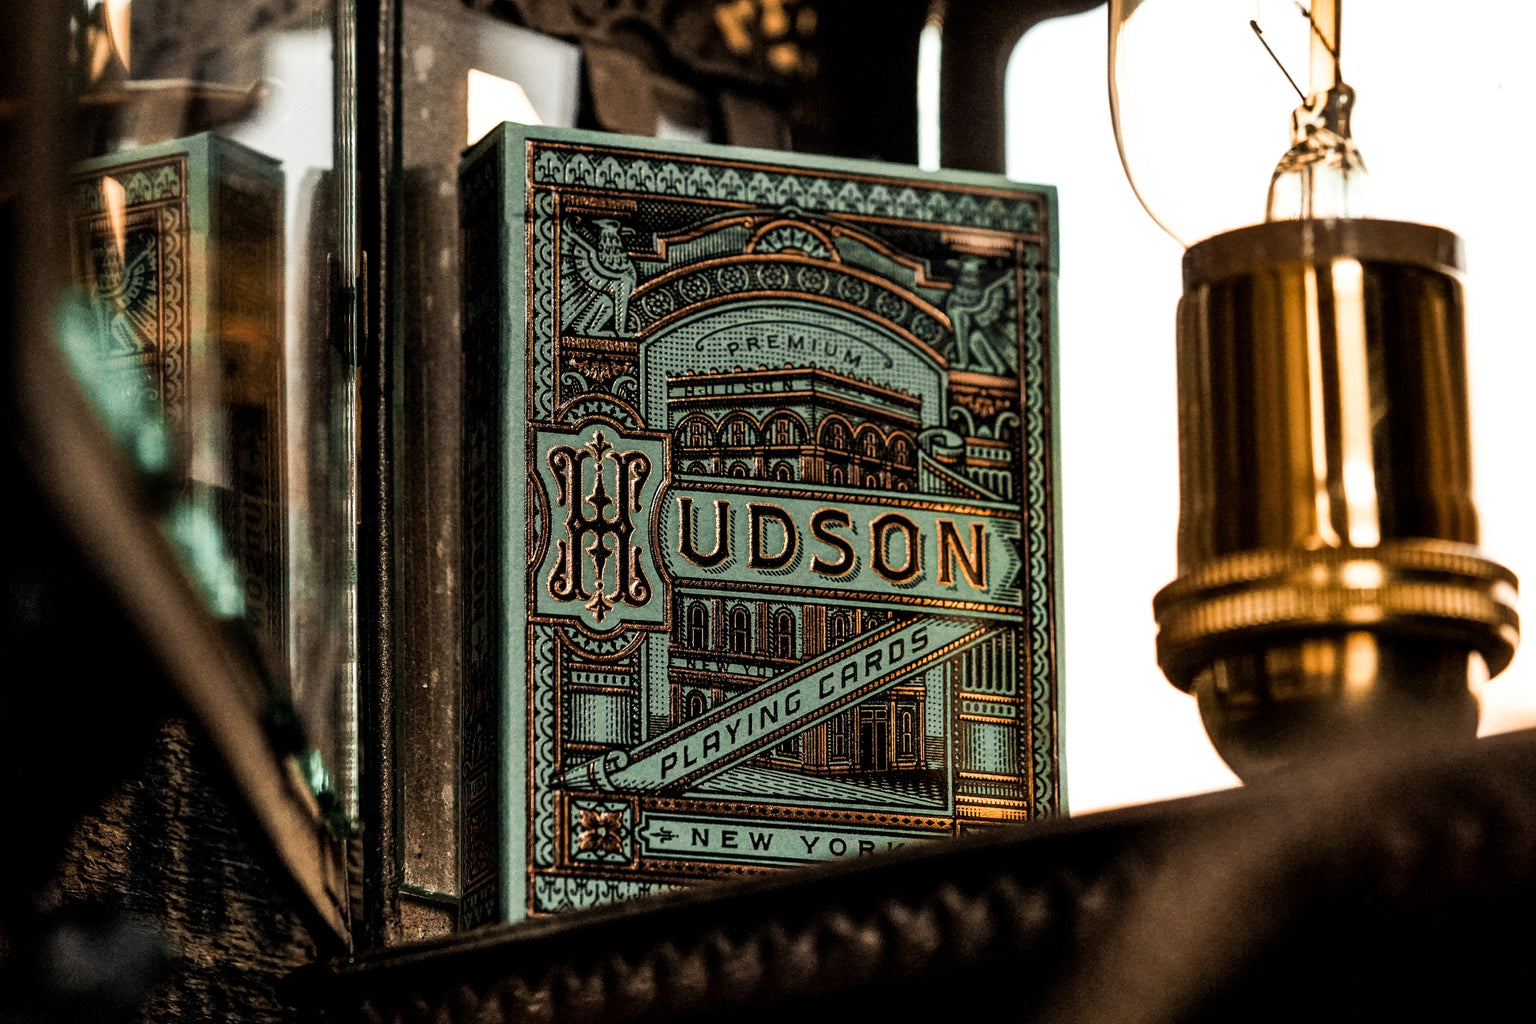 Hudson Playing Cards